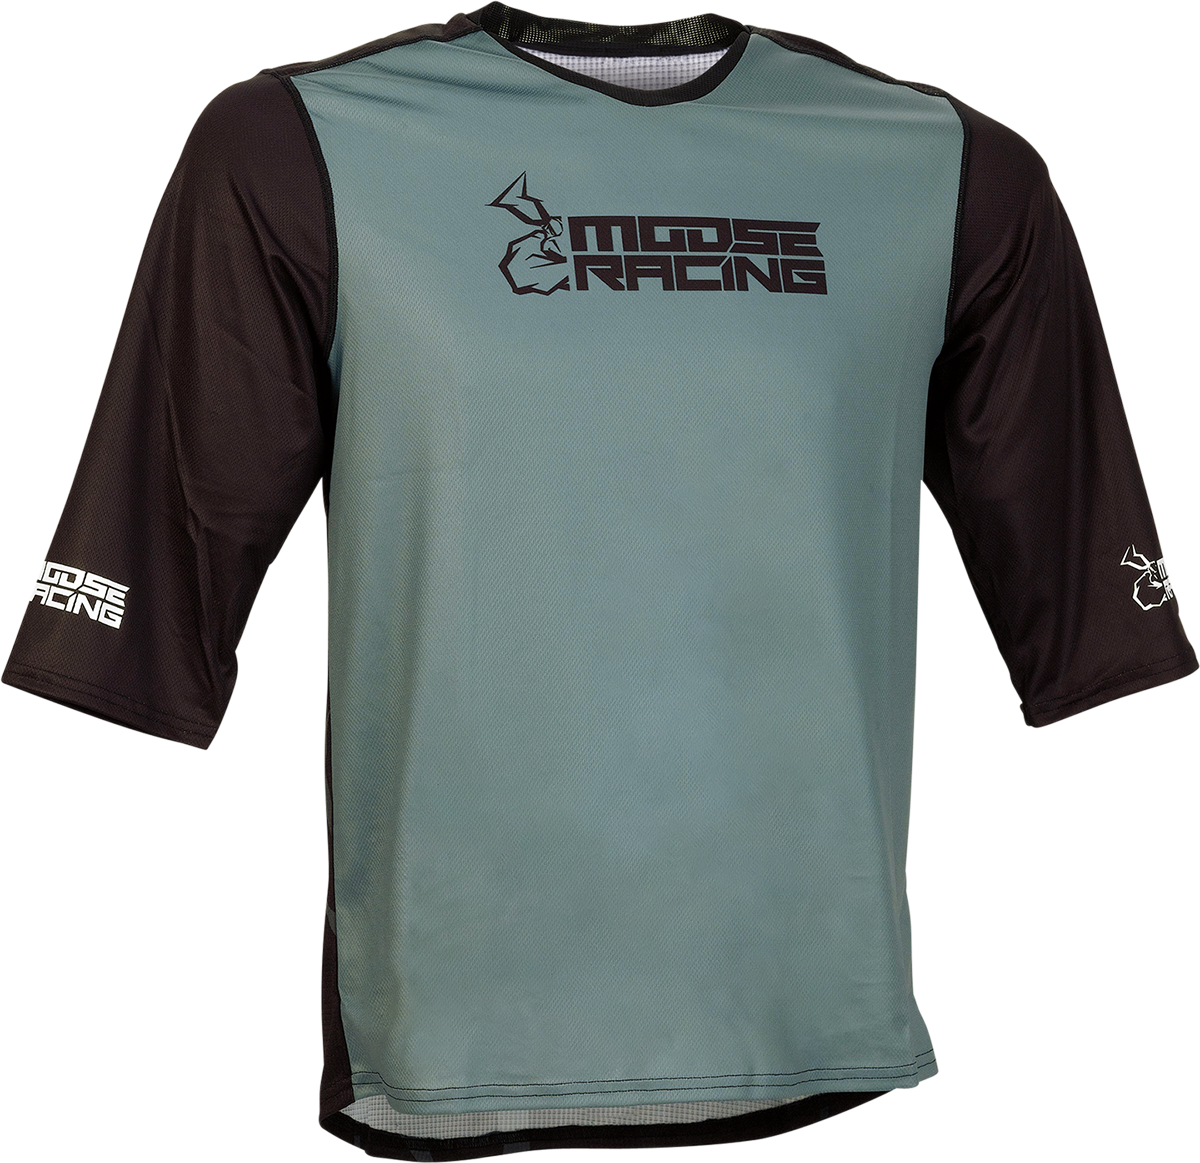 MOOSE RACING MTB Jersey - 3/4 Sleeve - Black - Medium 5020-0239